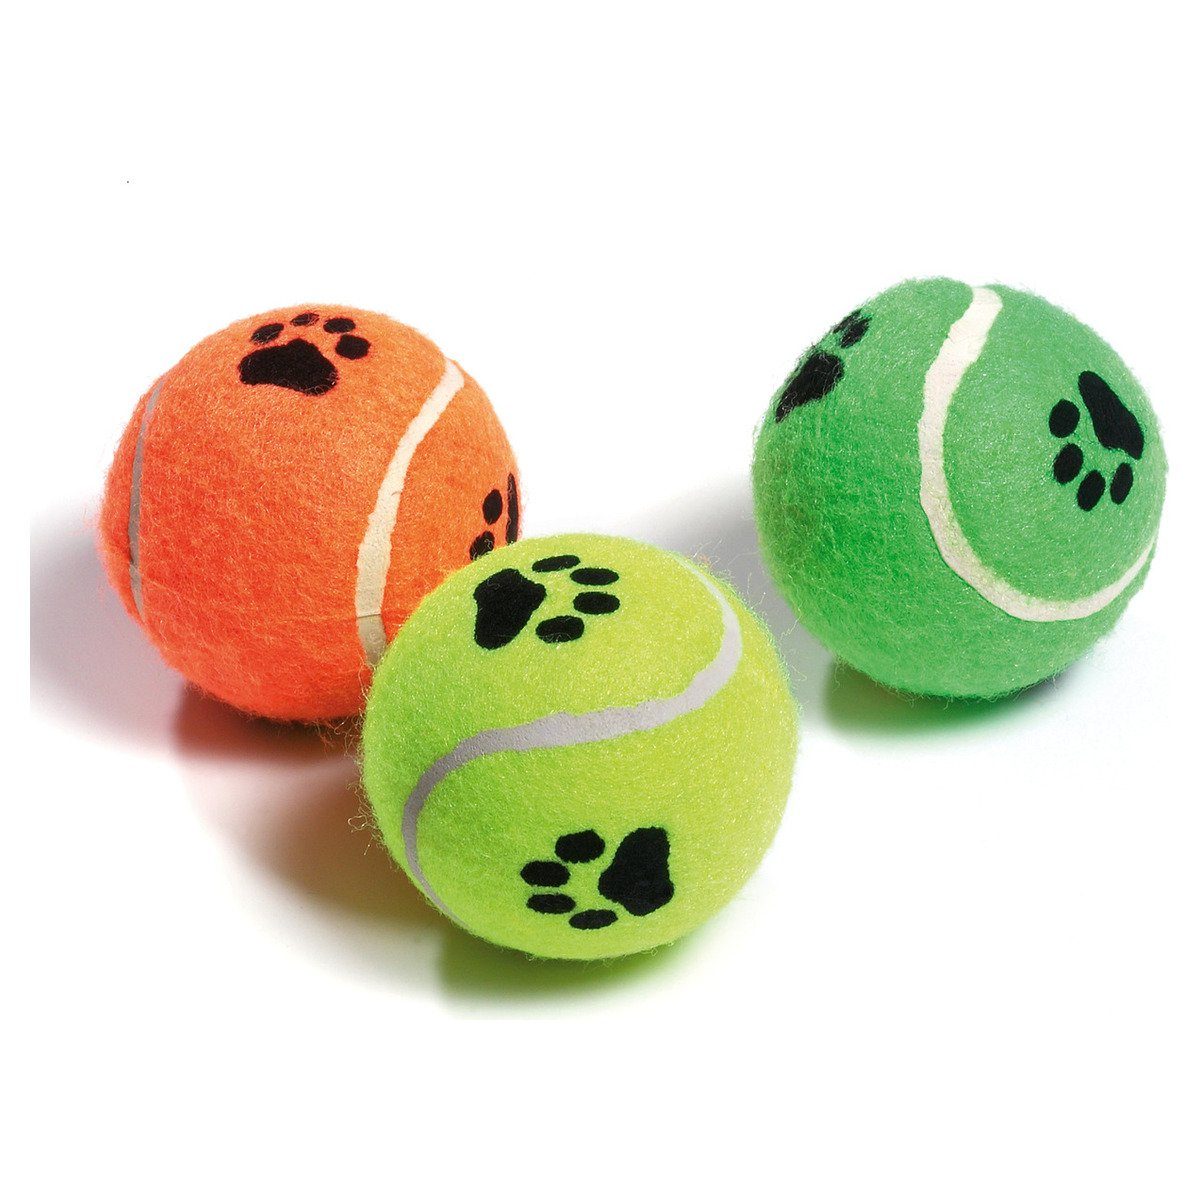 Hundespielzeug Karlie Tennisball 3er Set Spielball